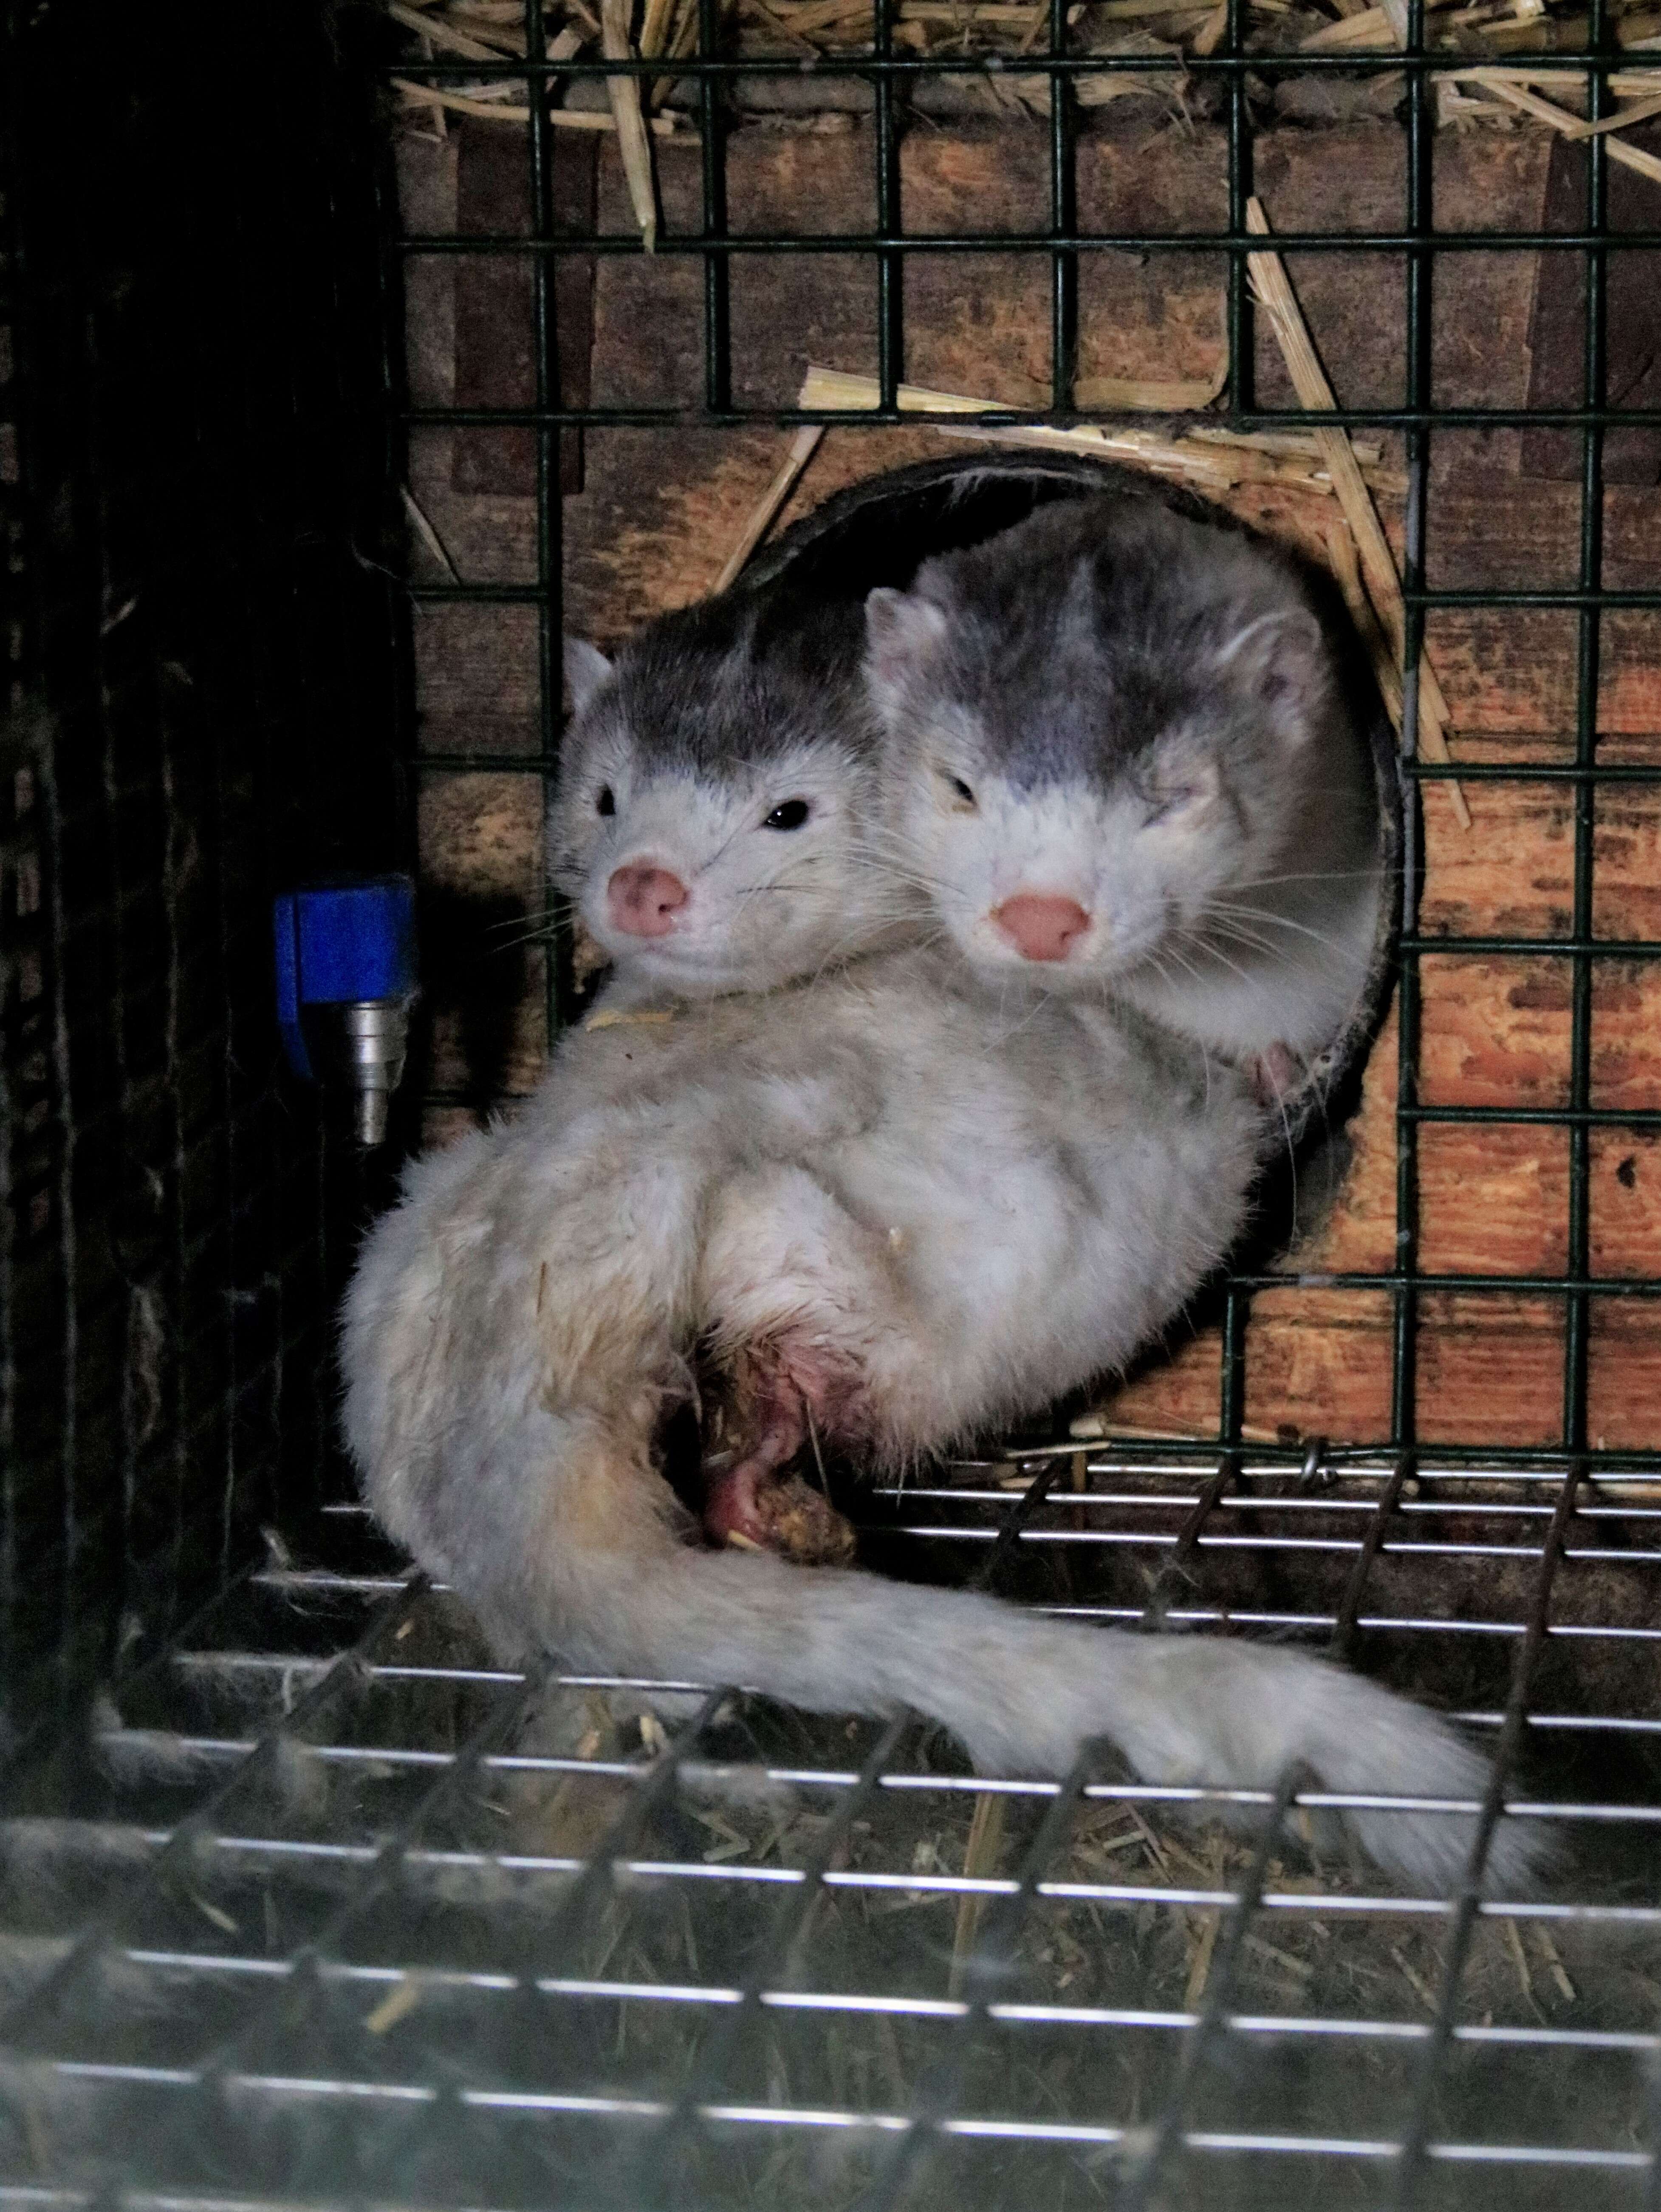 Animals in cage at fur farm